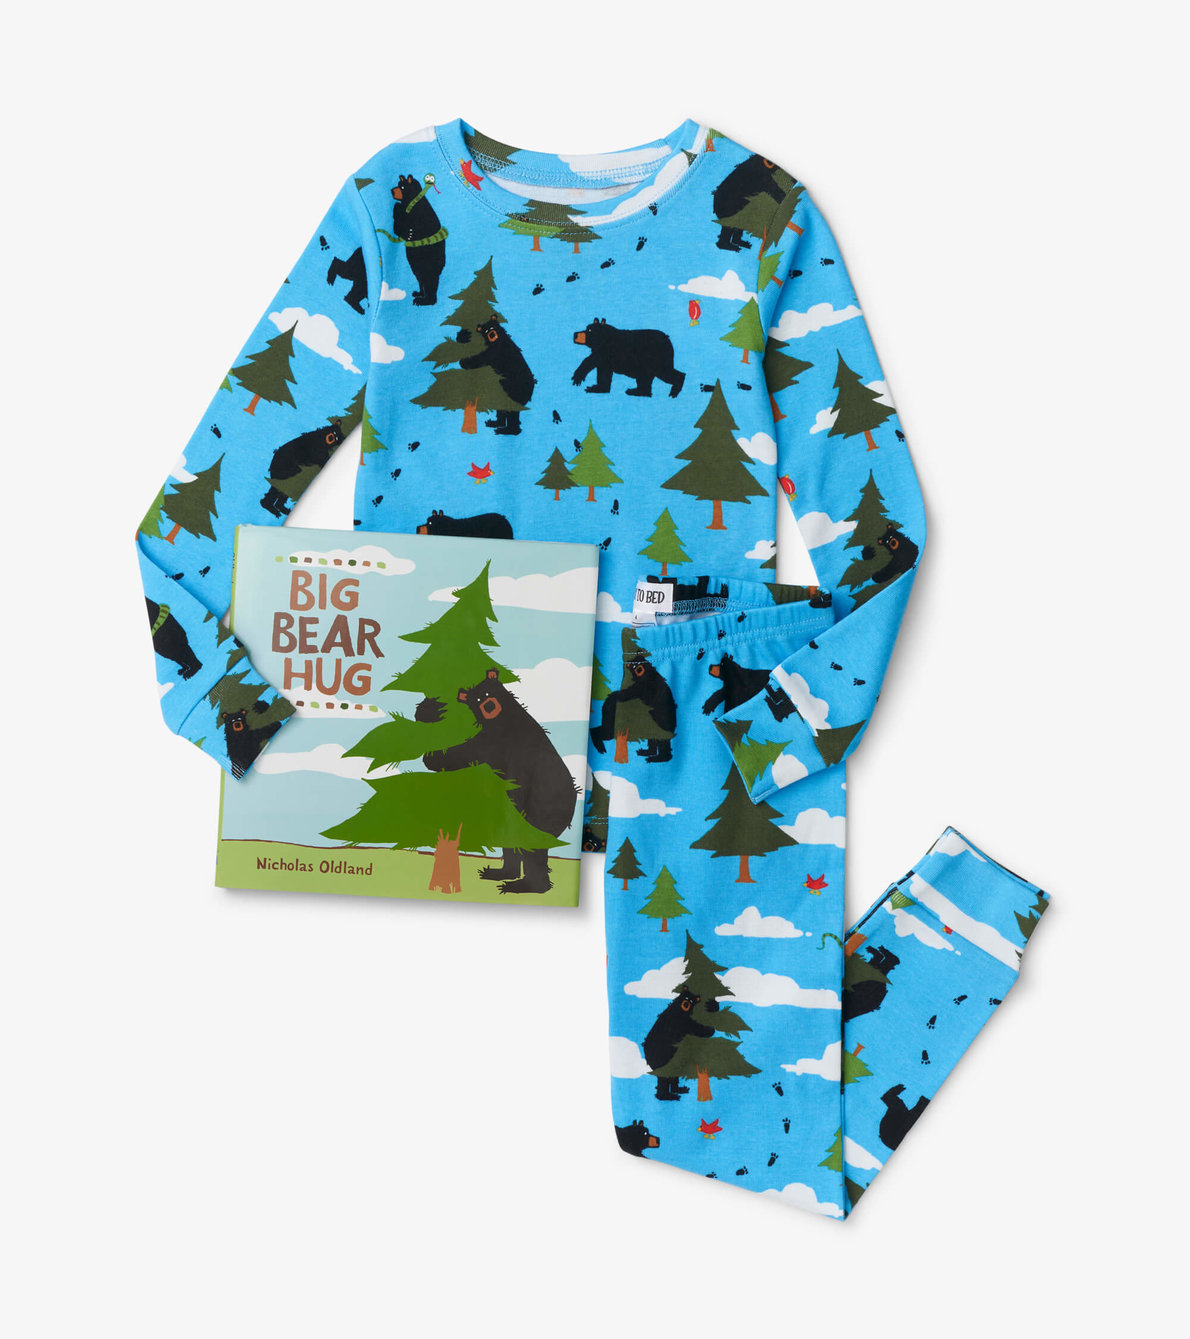 View larger image of Blue Big Bear Hug Book and Pajama Set